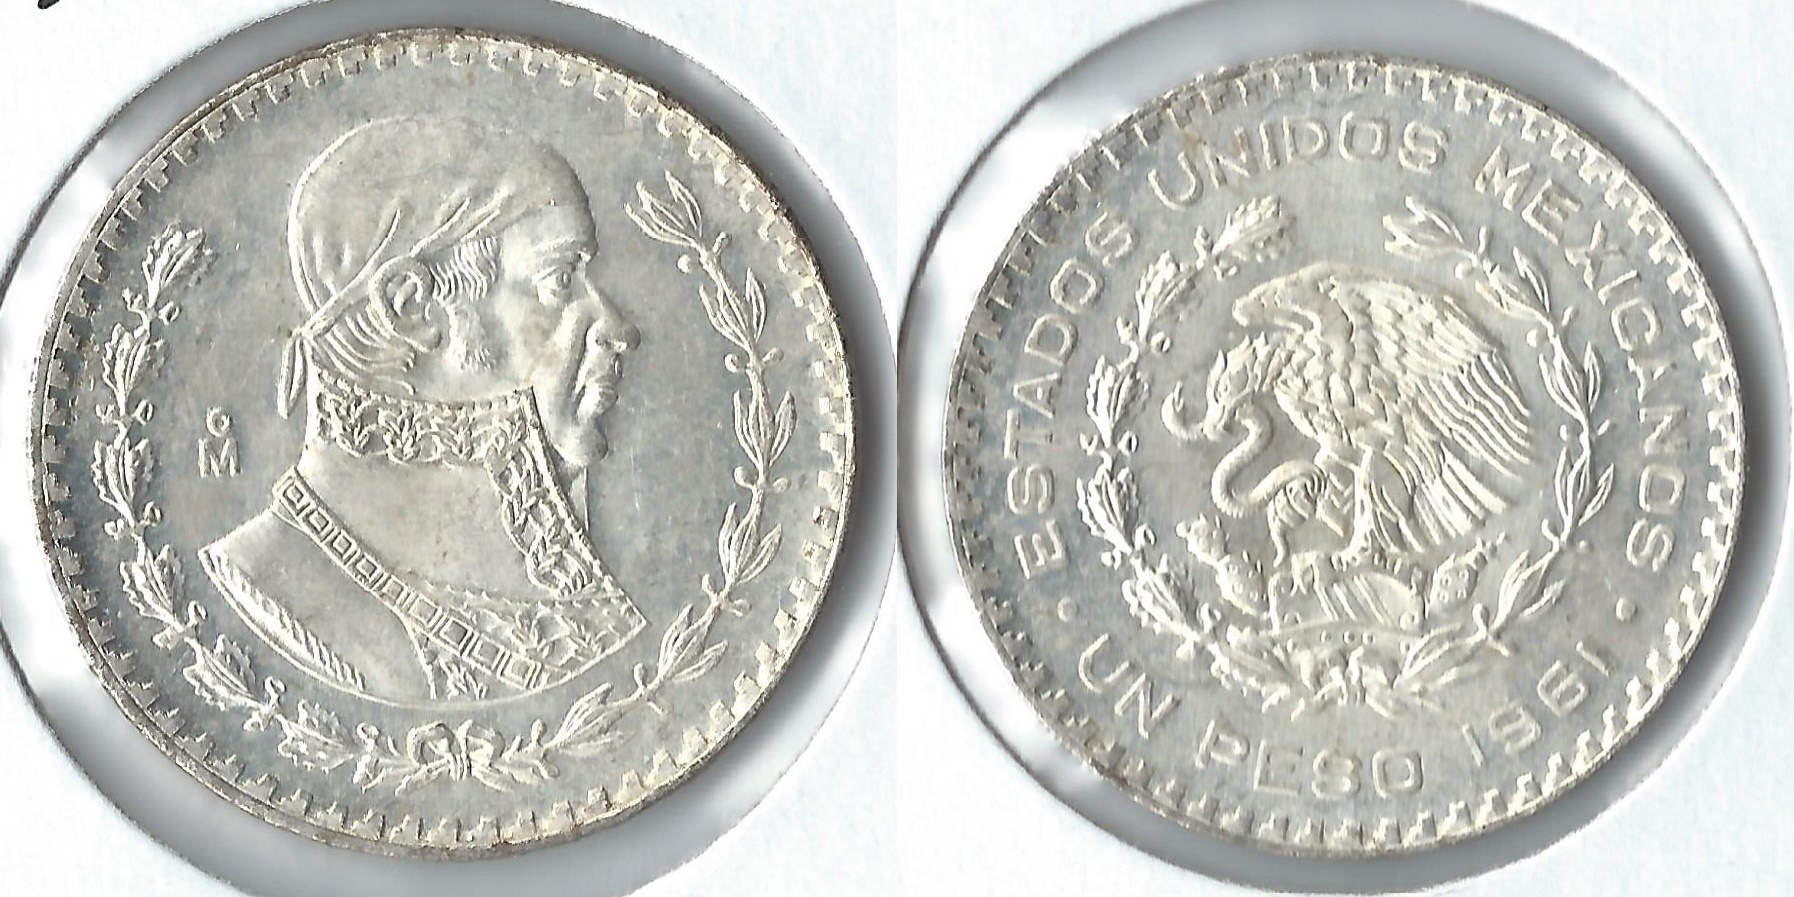 1961 mexico 1 peso.jpg